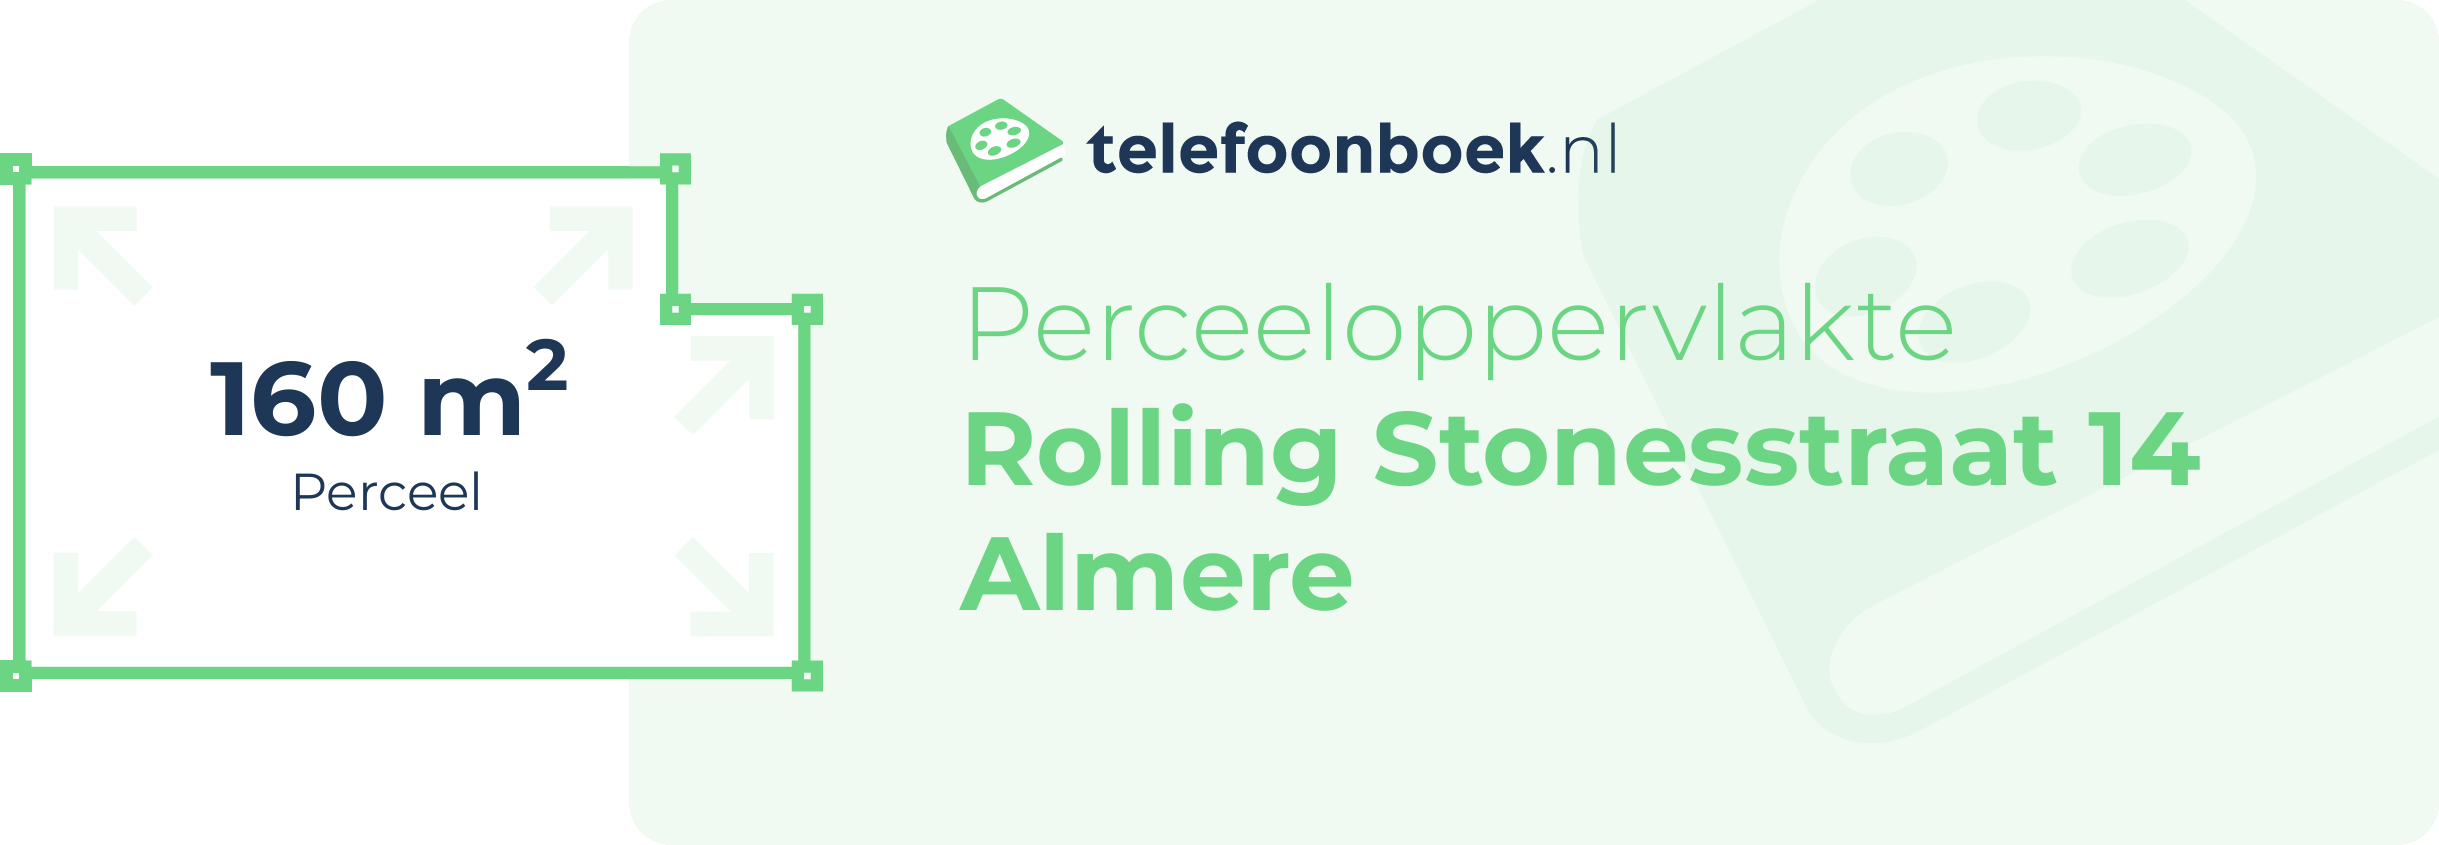 Perceeloppervlakte Rolling Stonesstraat 14 Almere